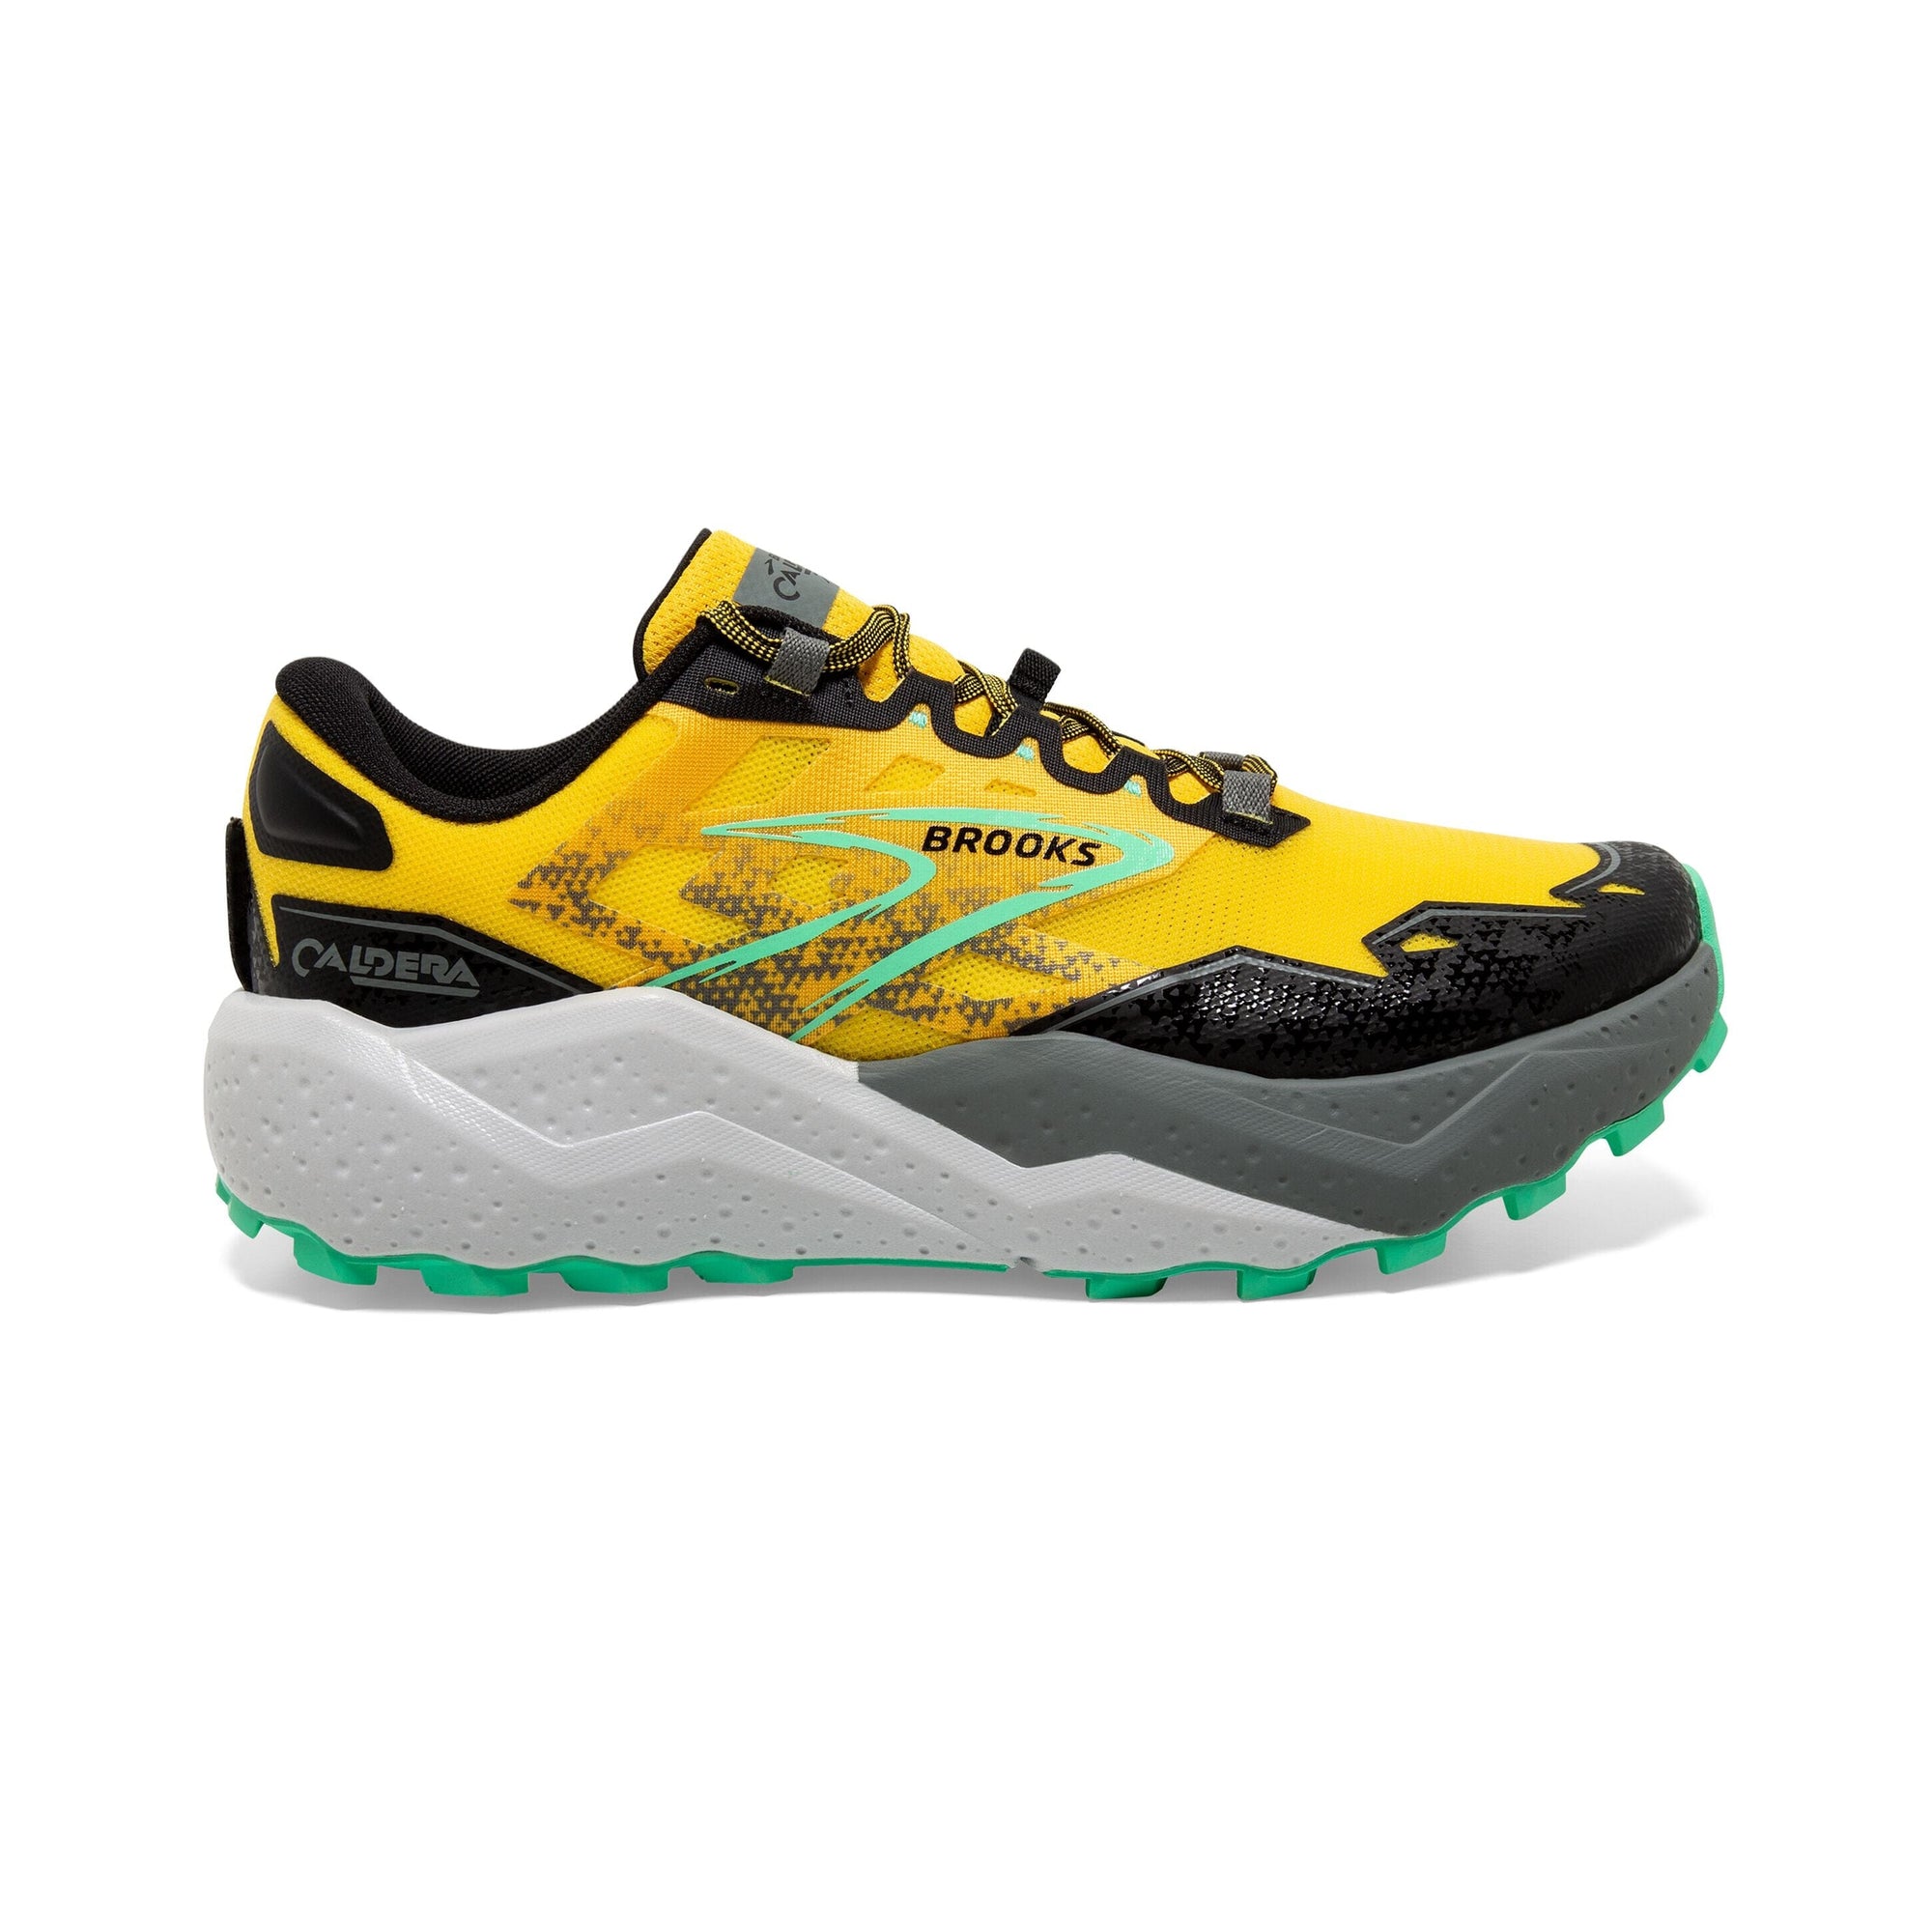 Brooks Men's Caldera 7 Trail Running Shoes Lemon Chrome/Black/Springbud US 9.5 